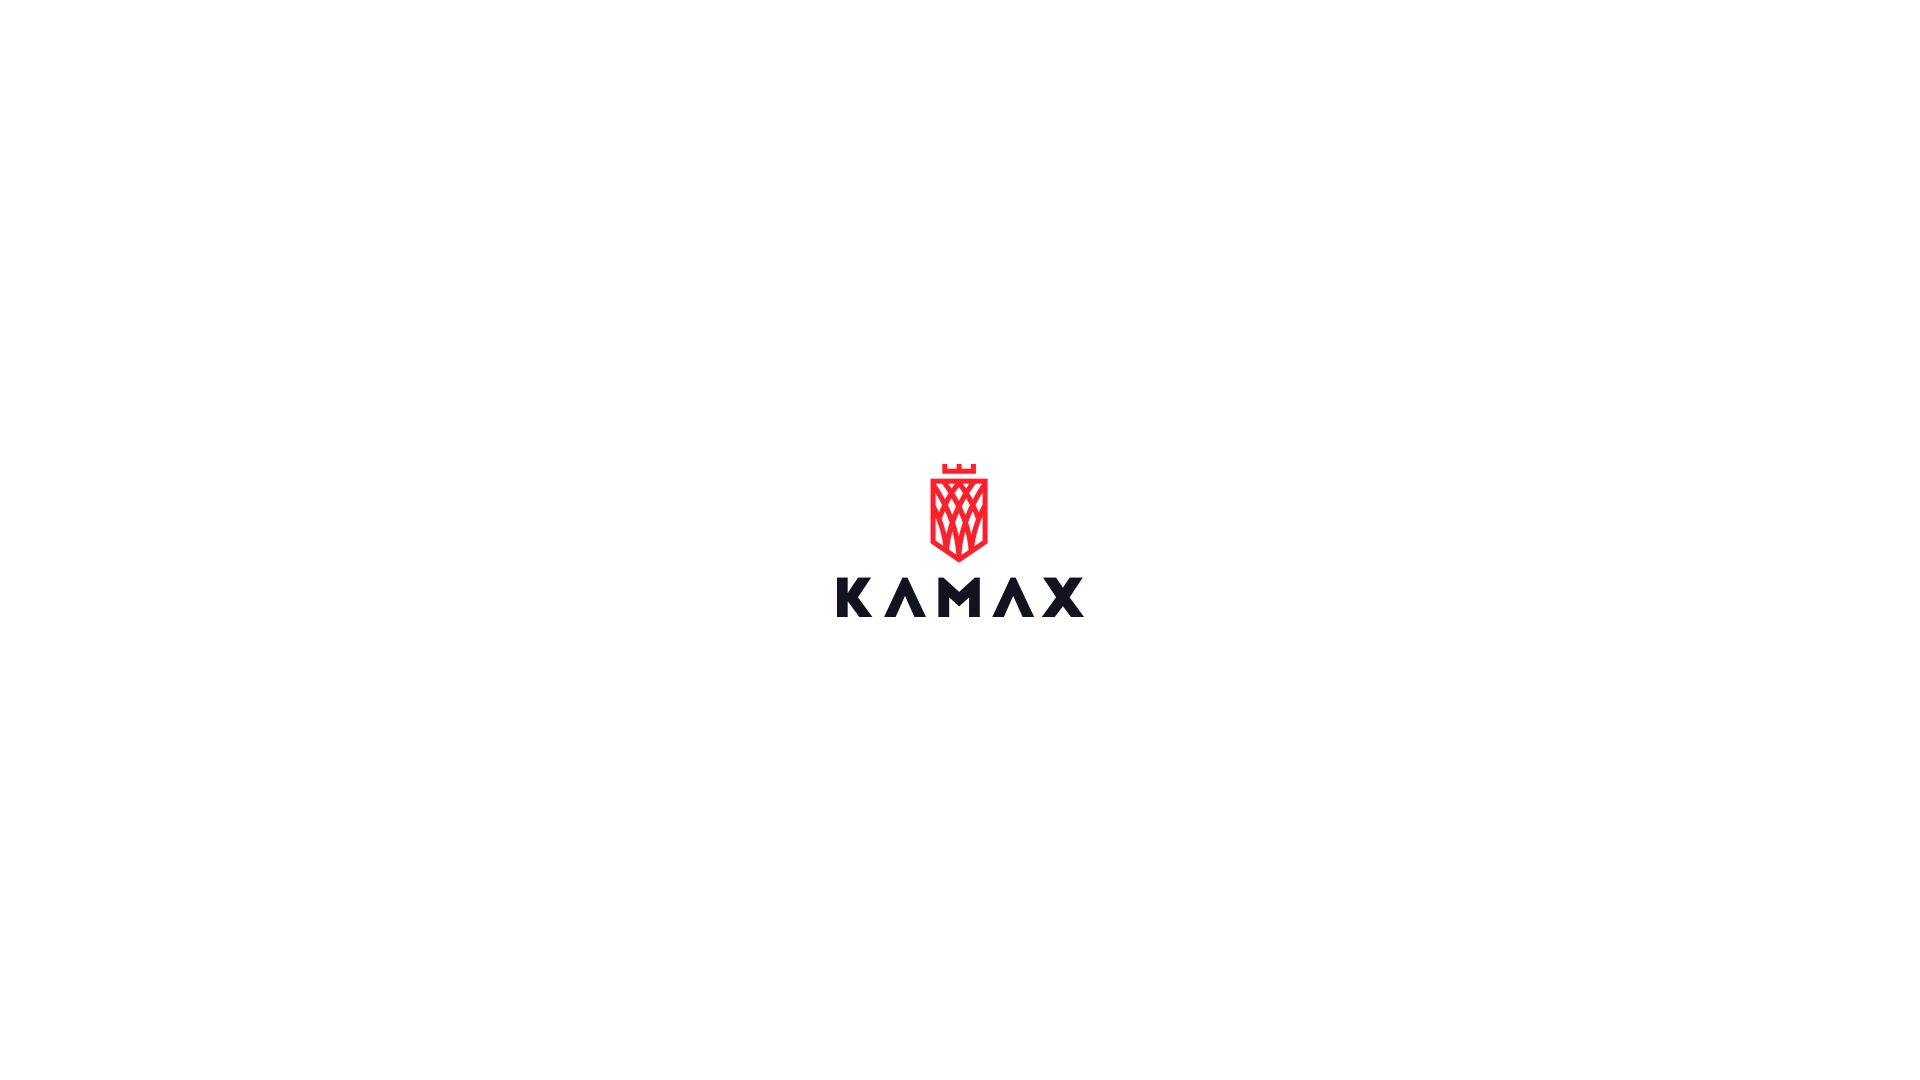 KAMAX logo 1